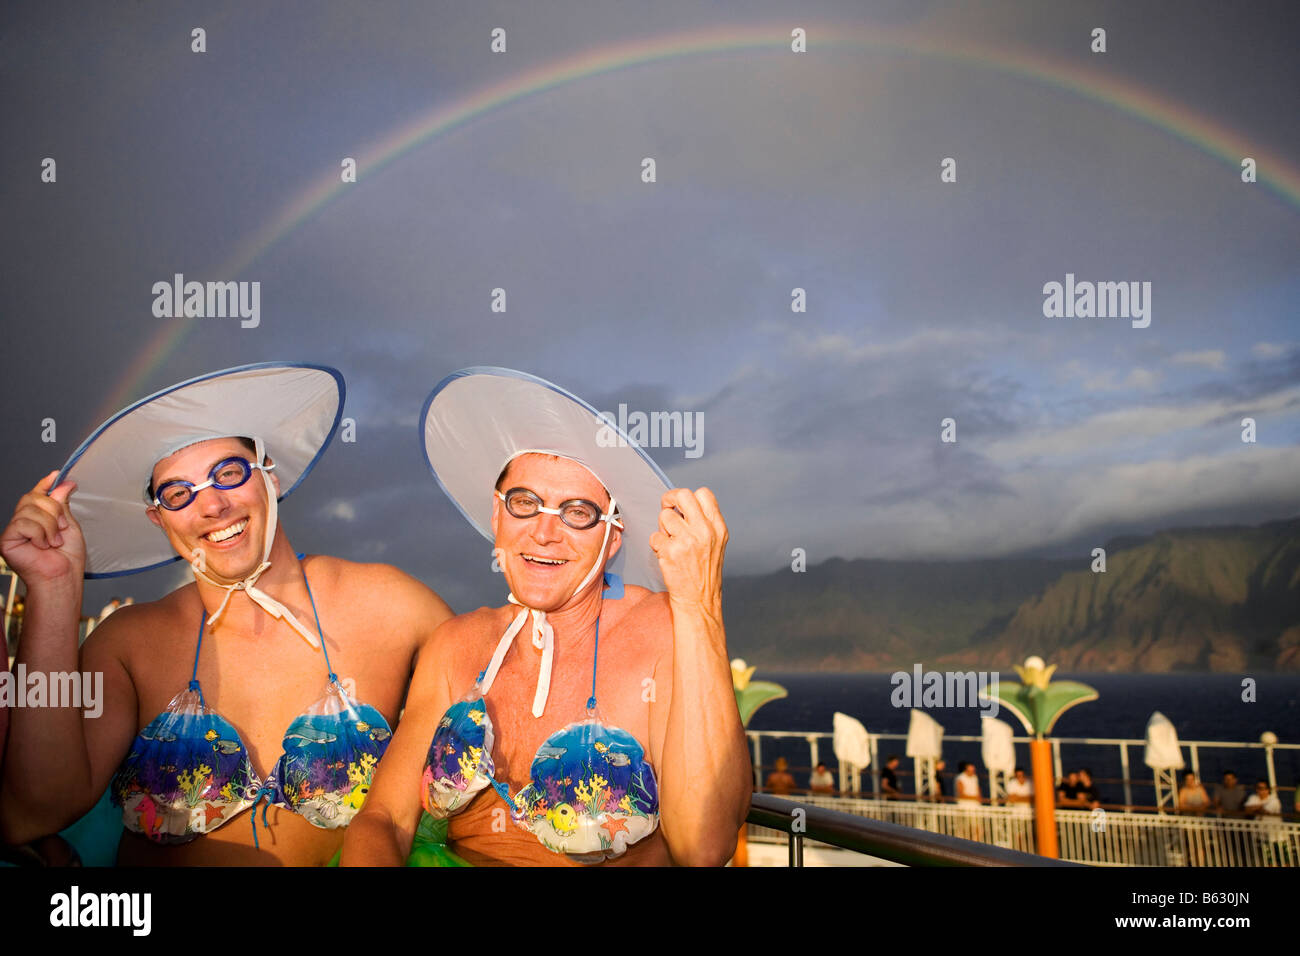 Two gay men wearing bikini tops and dancing Stock Photo - Alamy